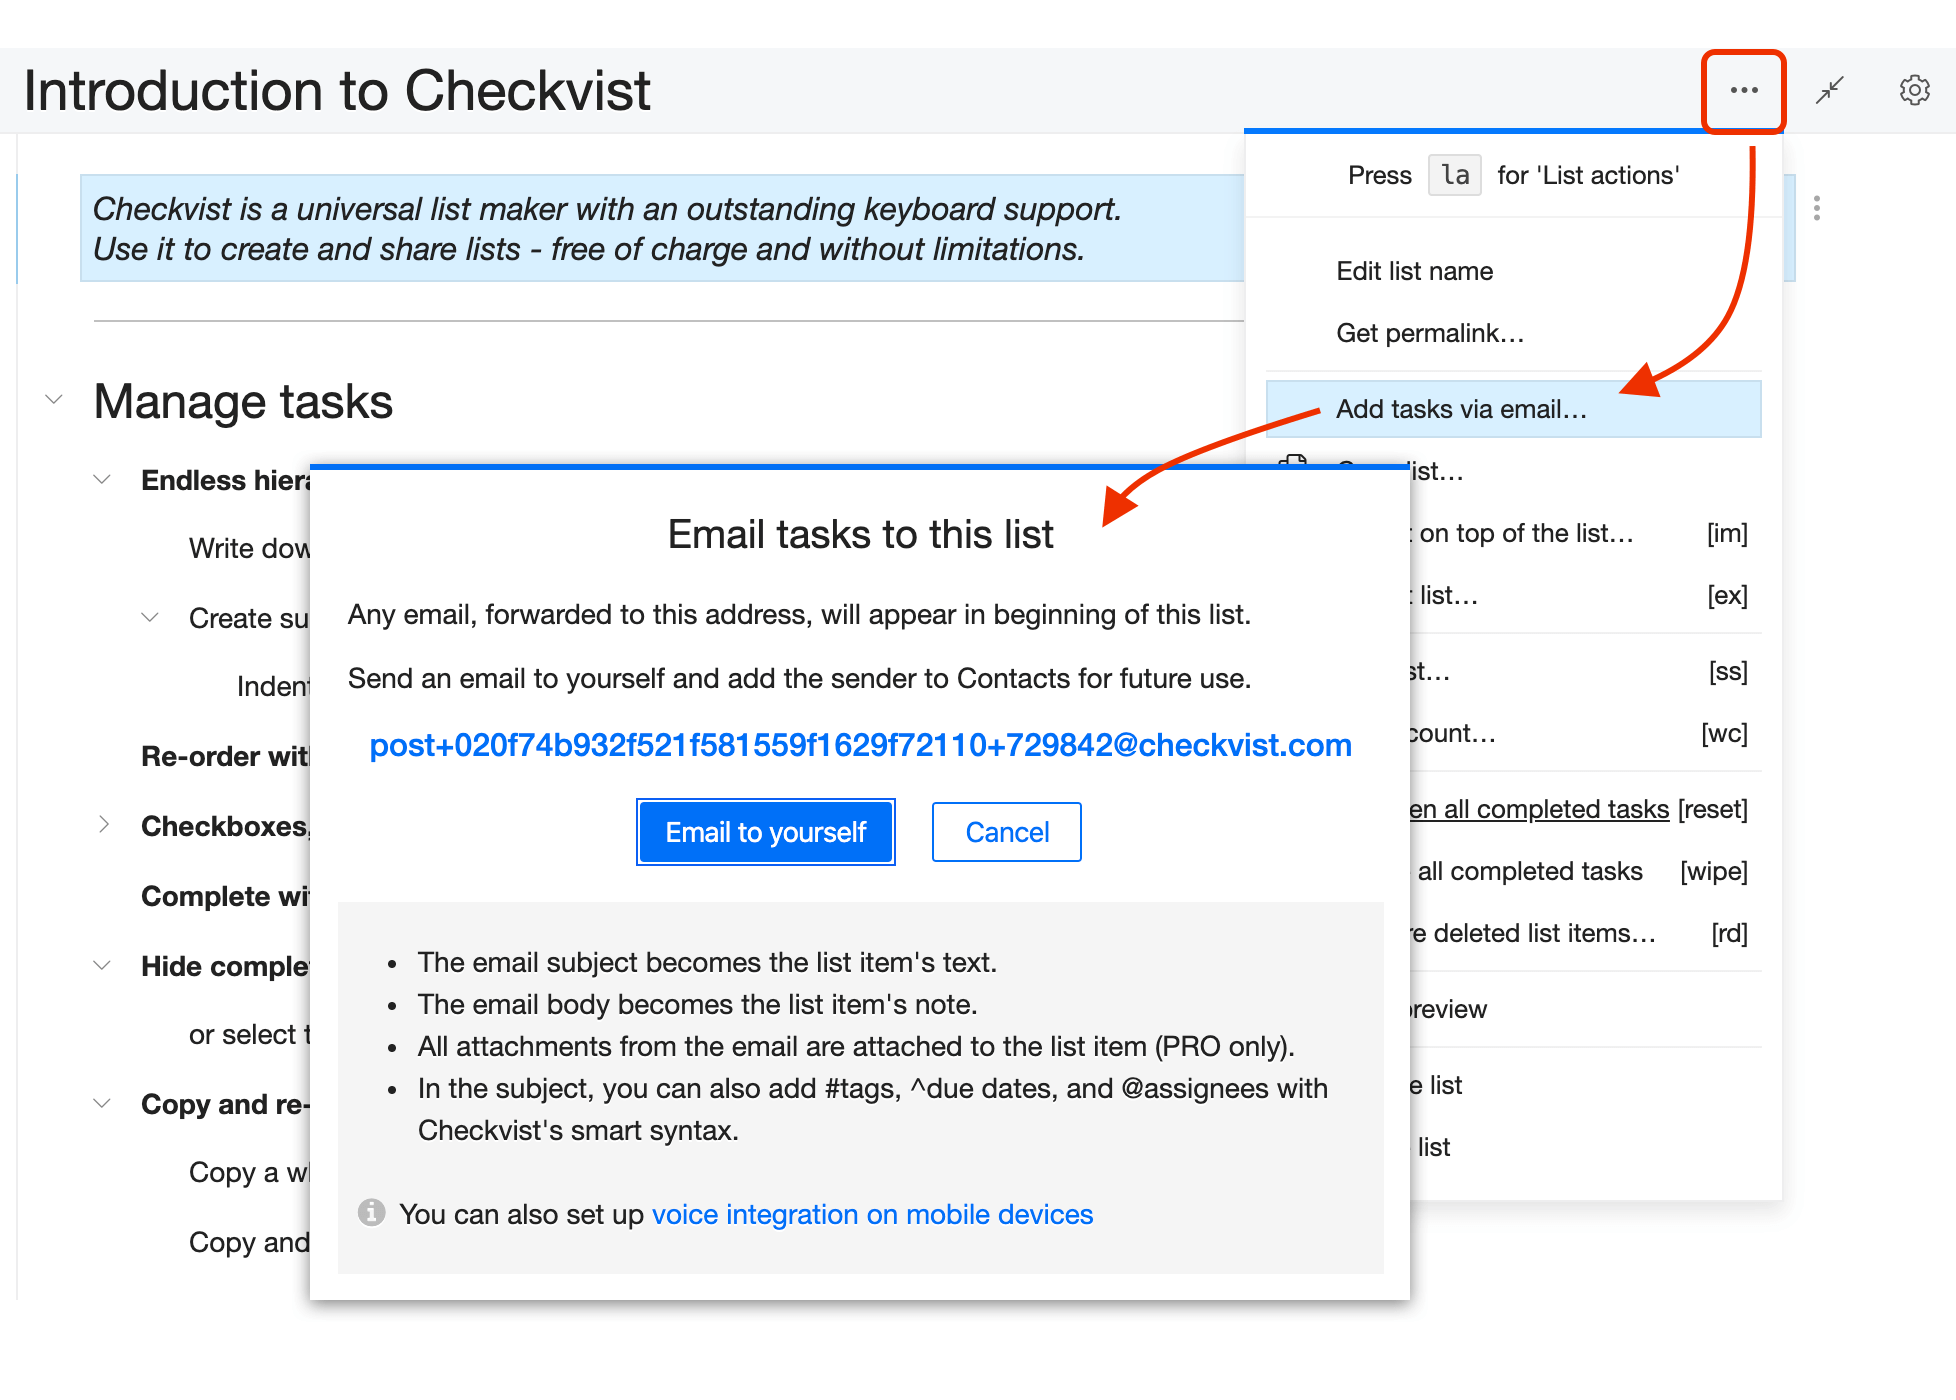 Add tasks via email